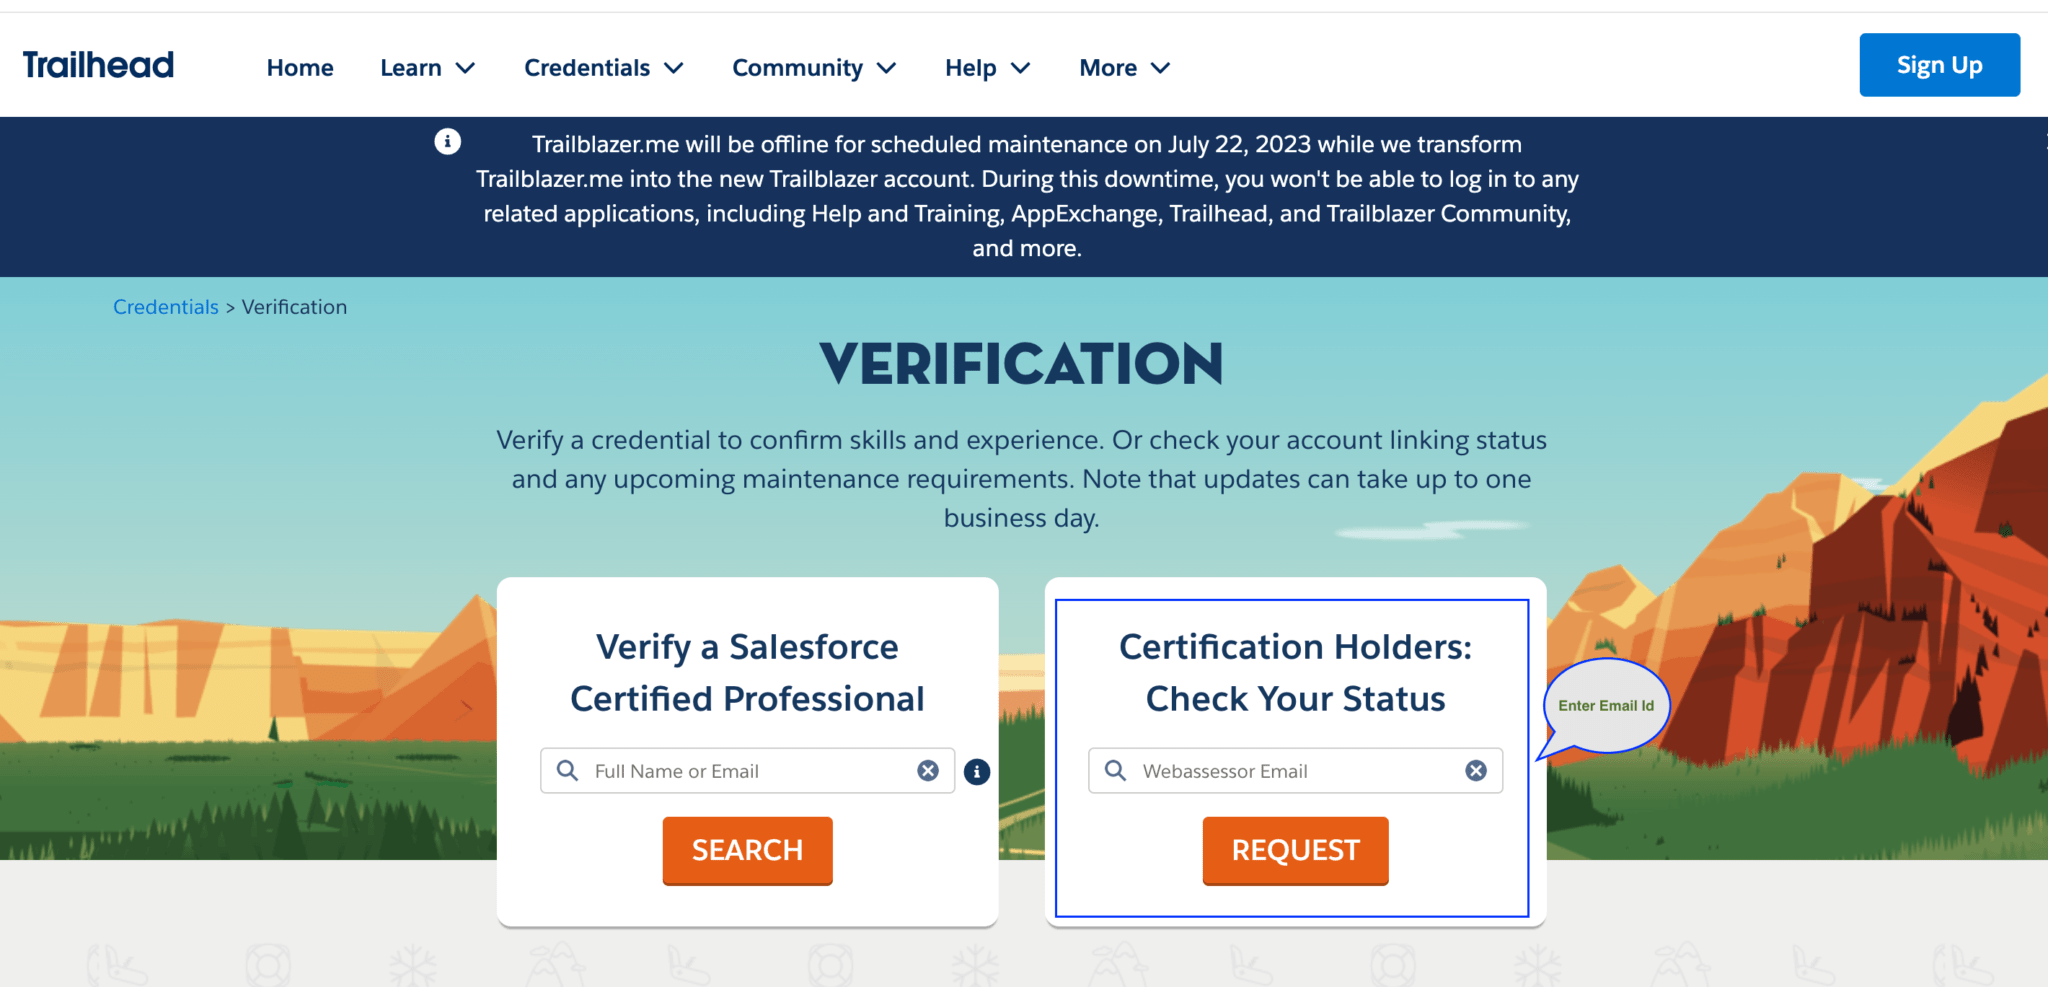 Salesforce Certification Verification Apex Hours